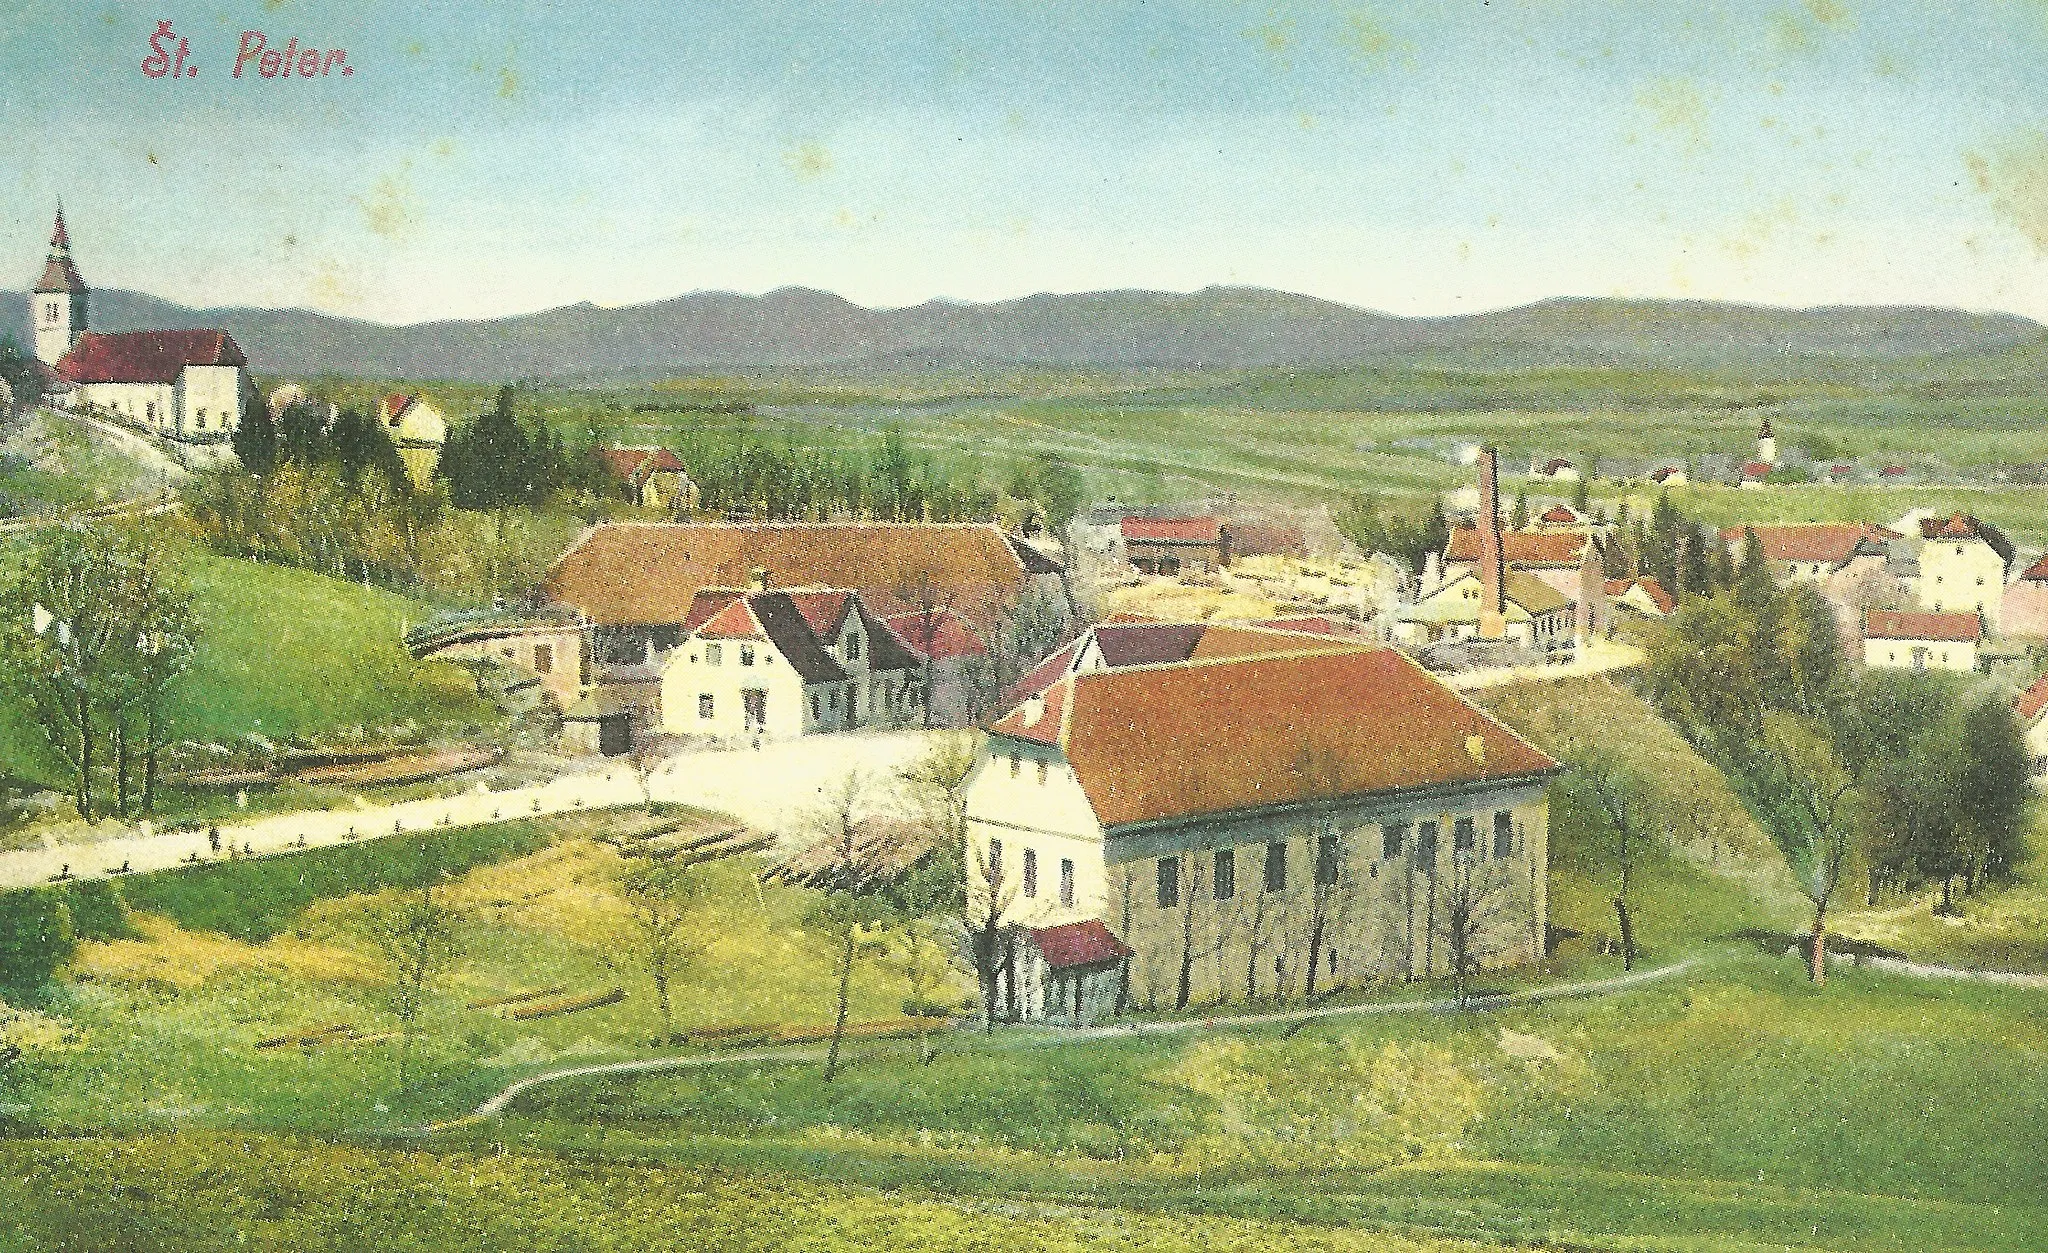 Imagen de Vzhodna Slovenija